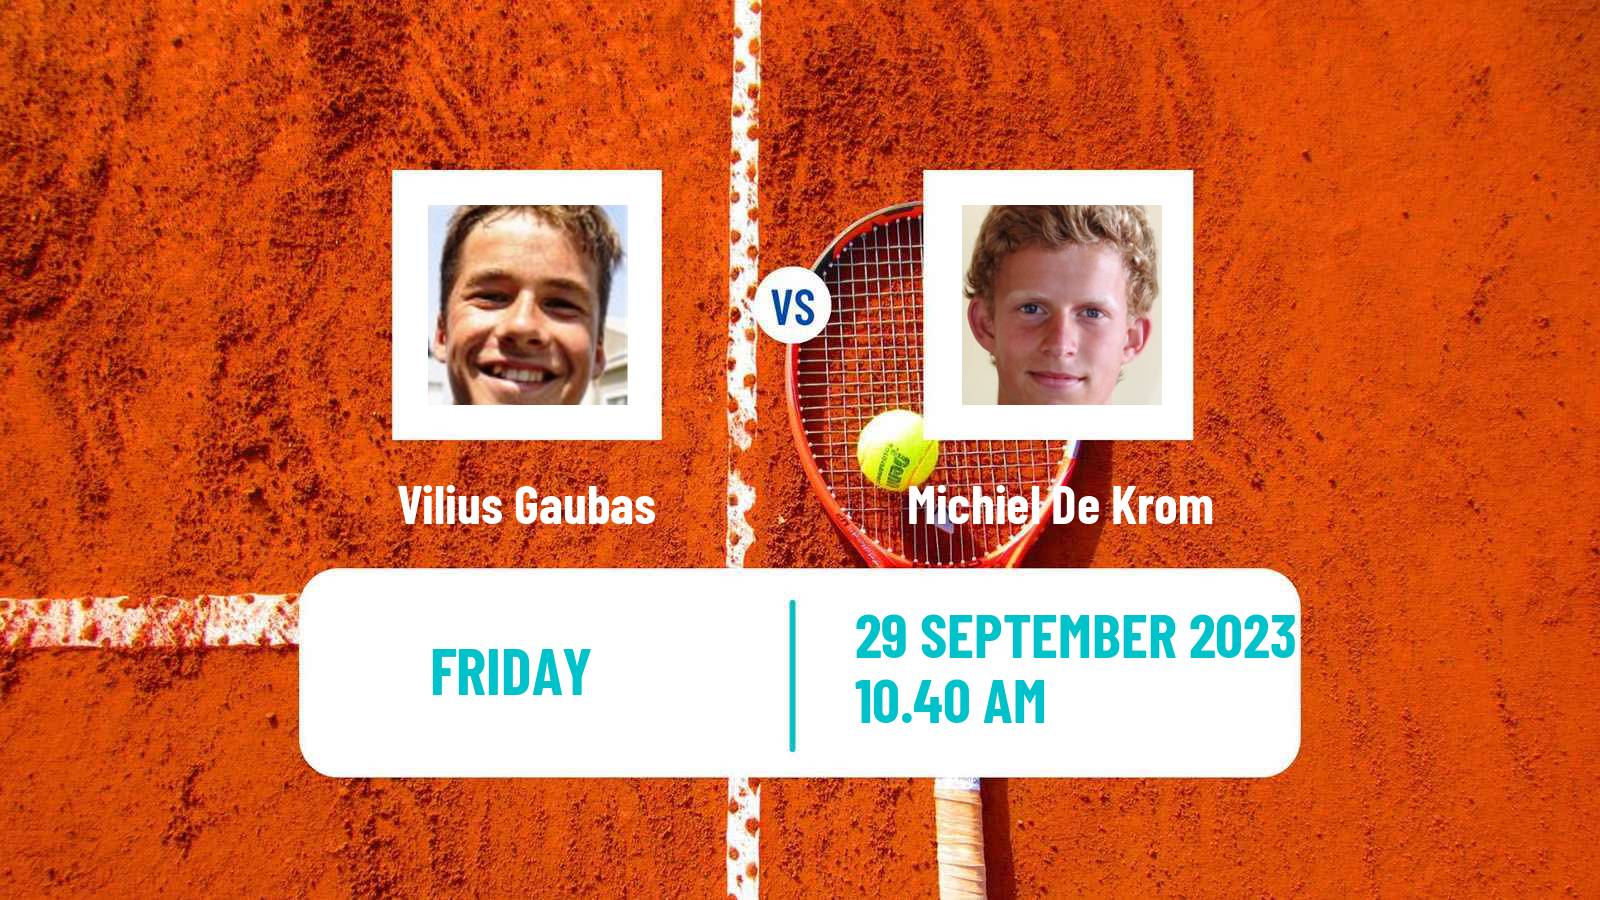 Tennis ITF M25 Sabadell 2 Men Vilius Gaubas - Michiel De Krom